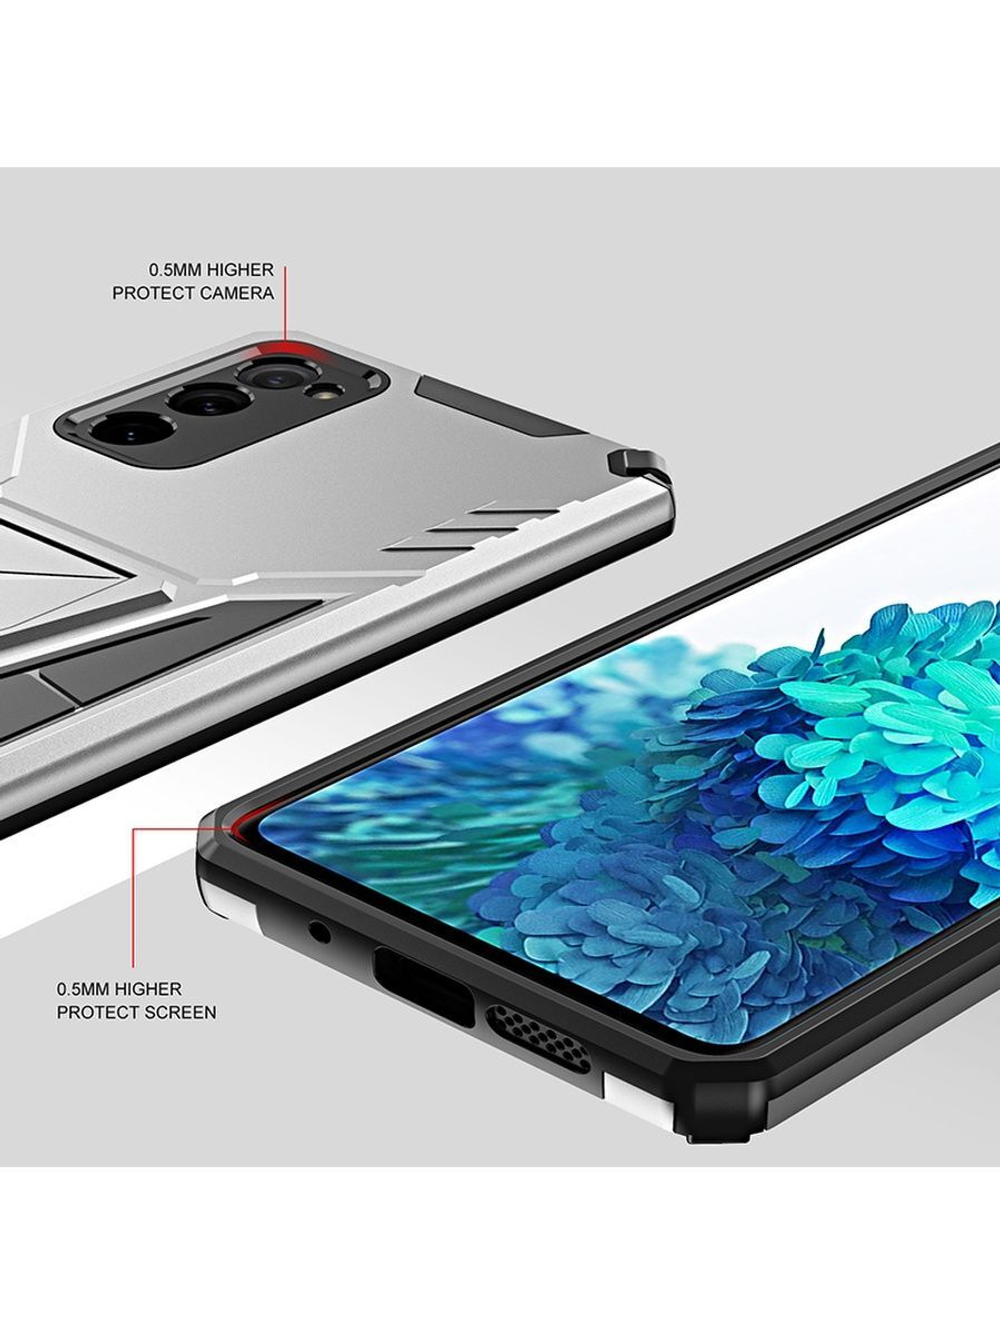 Чехол Rack Case для Samsung Galaxy S20 FE